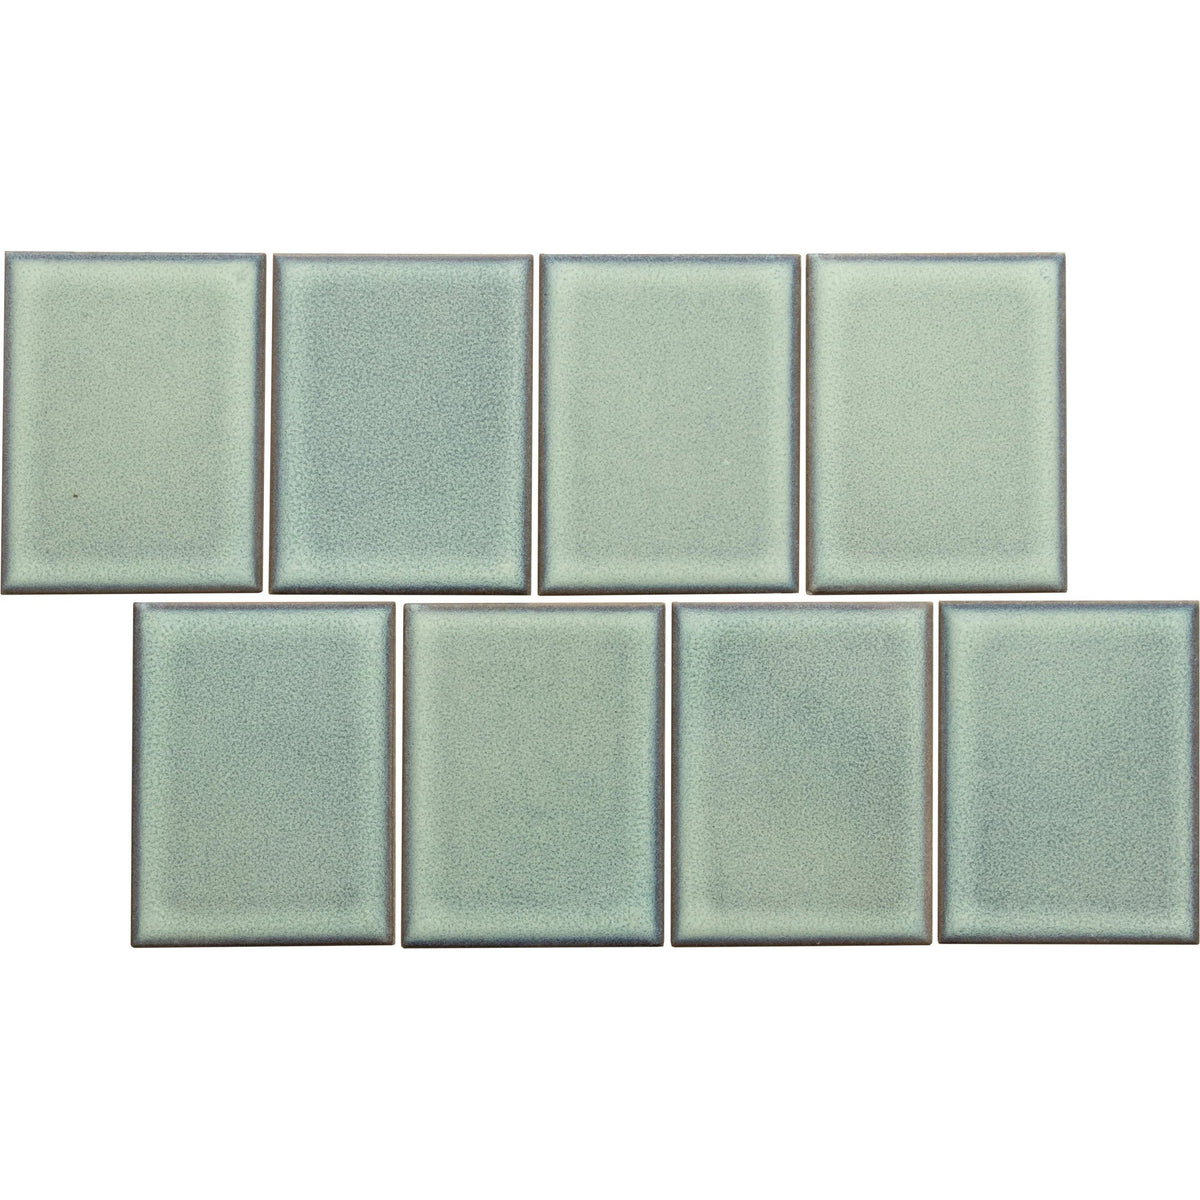 Emser Tile - Cuadro - 9 in. x 14 in. Glazed Porcelain Mosaic - Sky